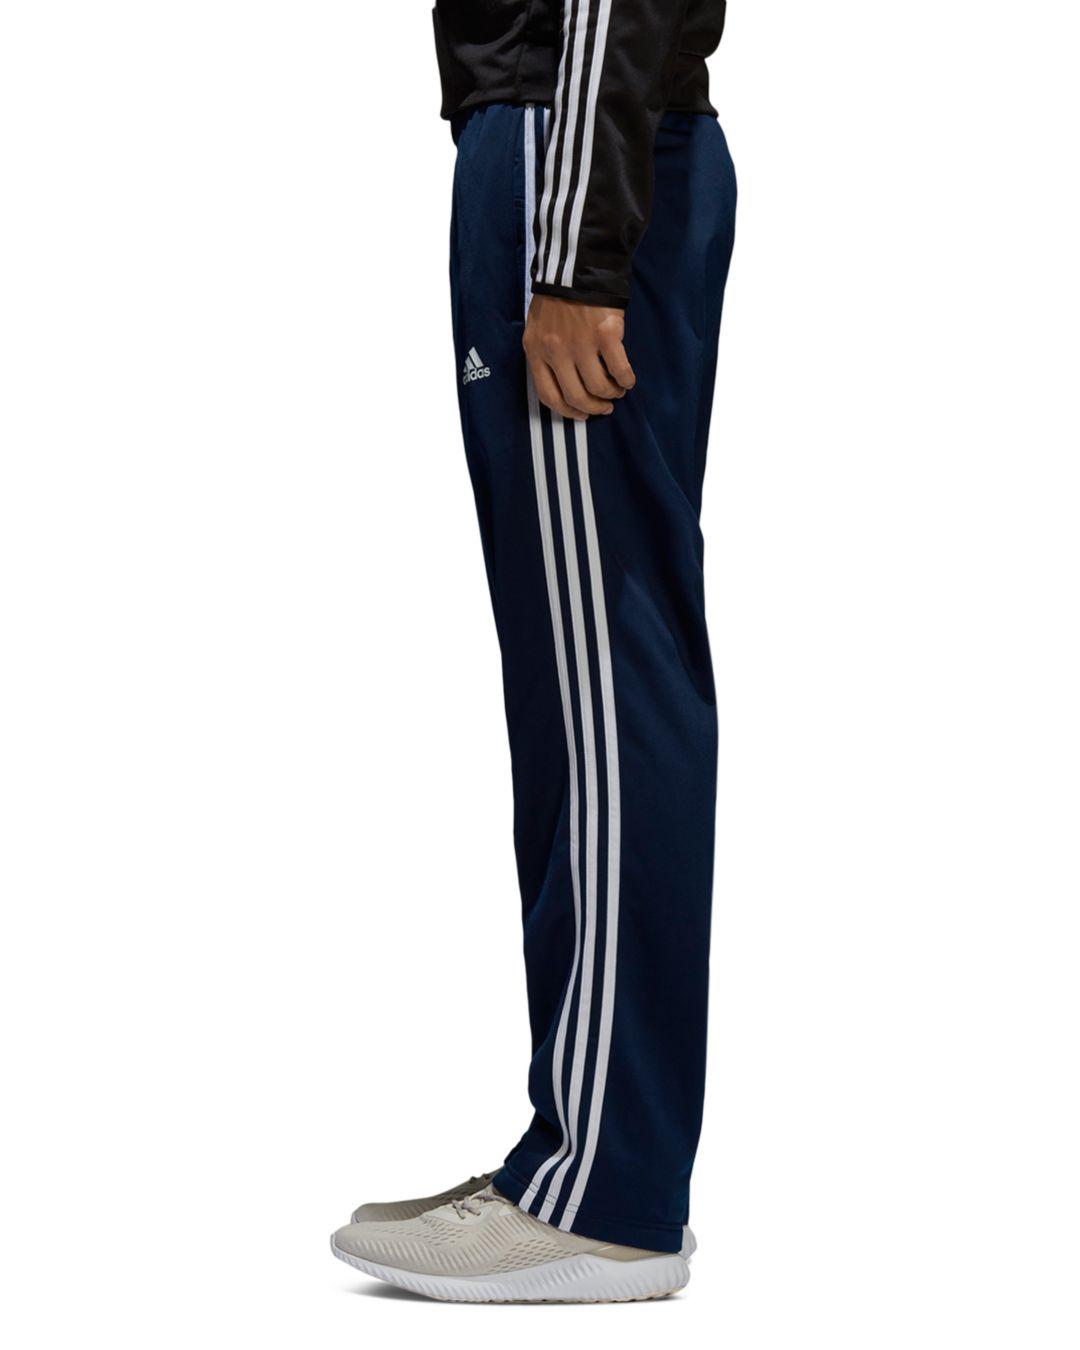 Lyst - Adidas Originals Three-stripe Track Pants in Blue for Men